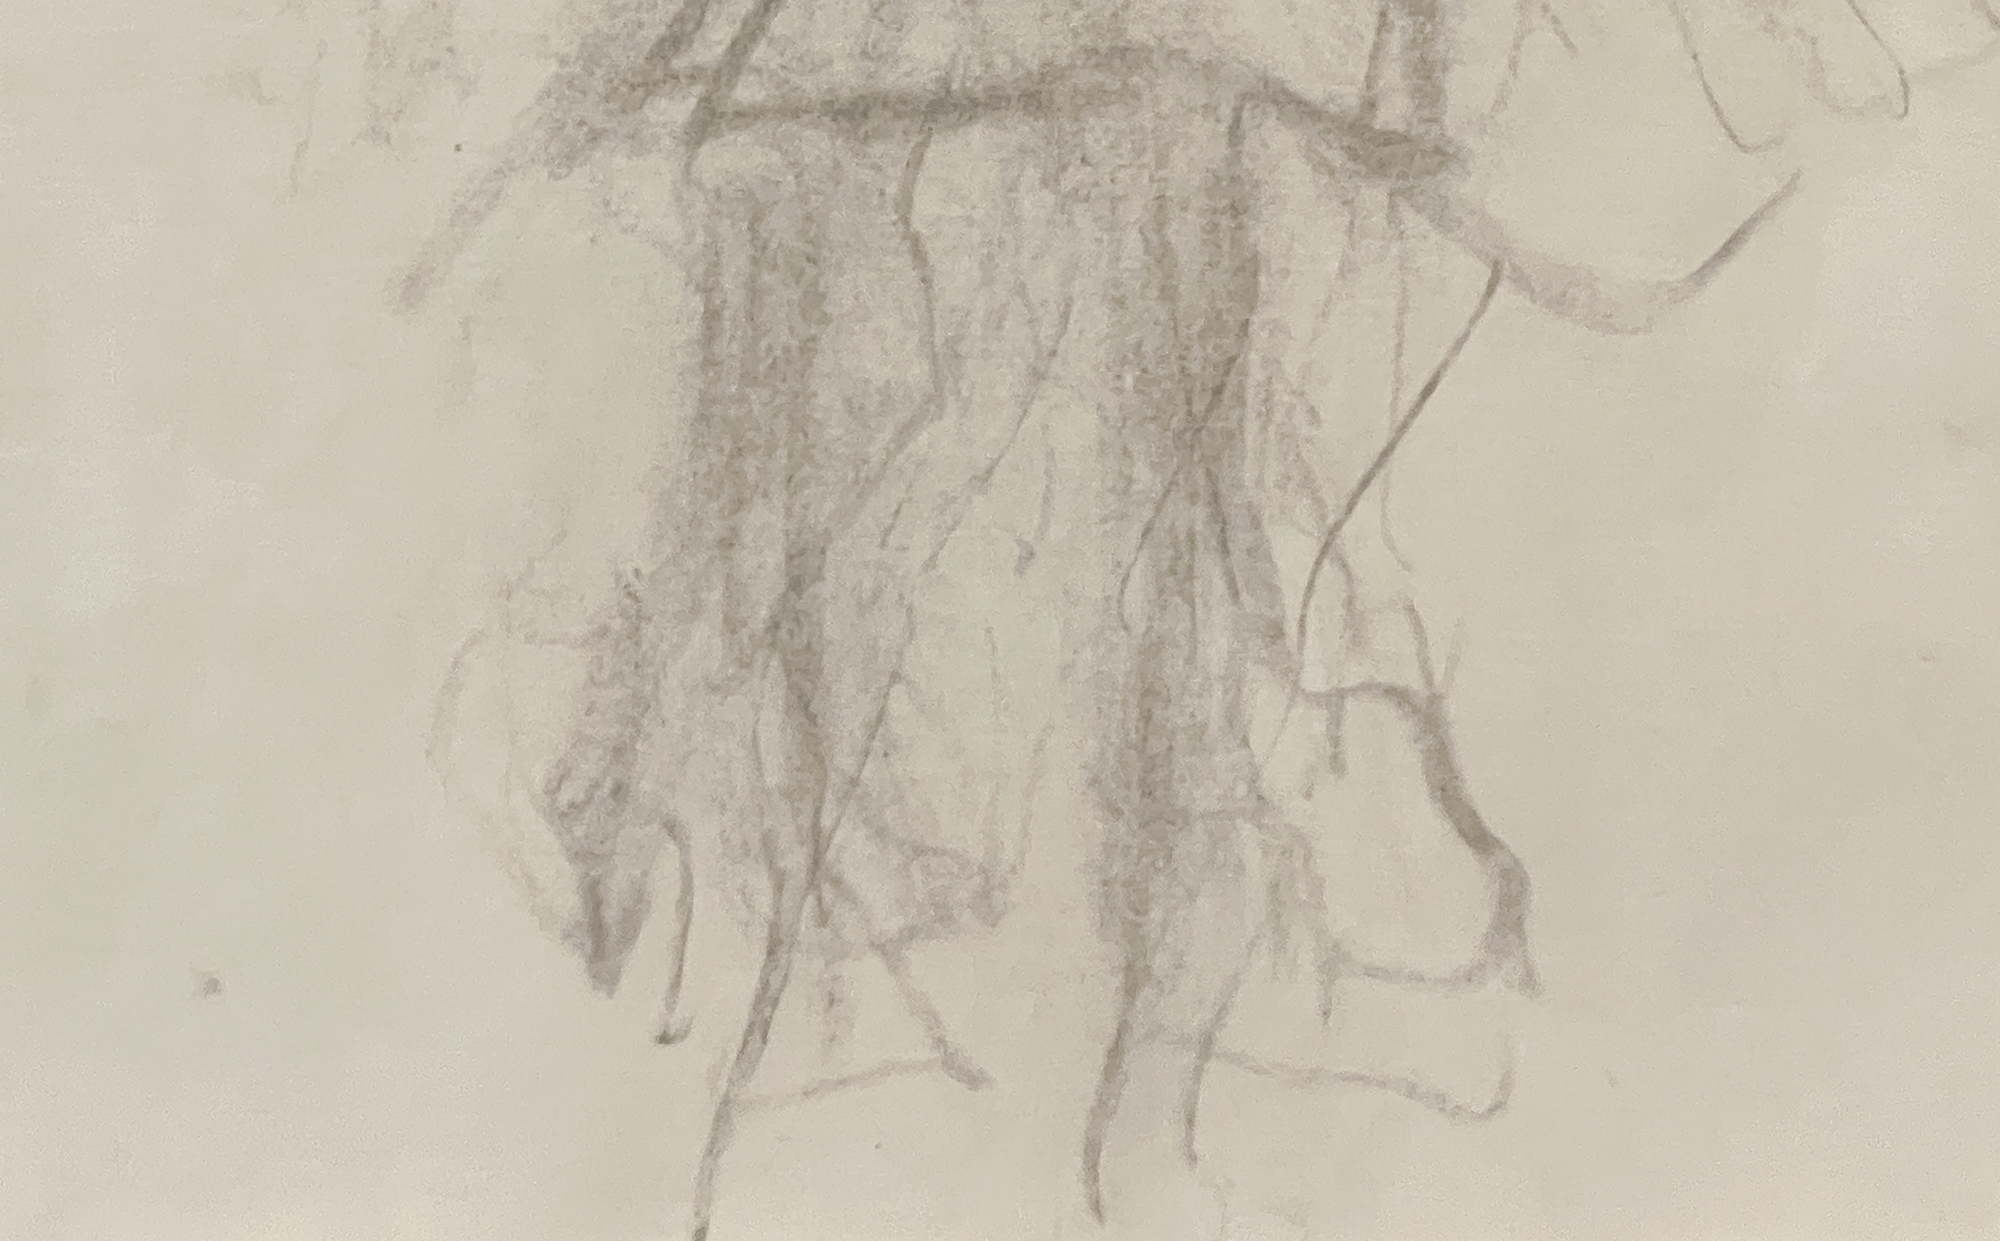 WILLEM DE KOONING - Untitled - Graphite on paper - 8 x 10 1/2 in.